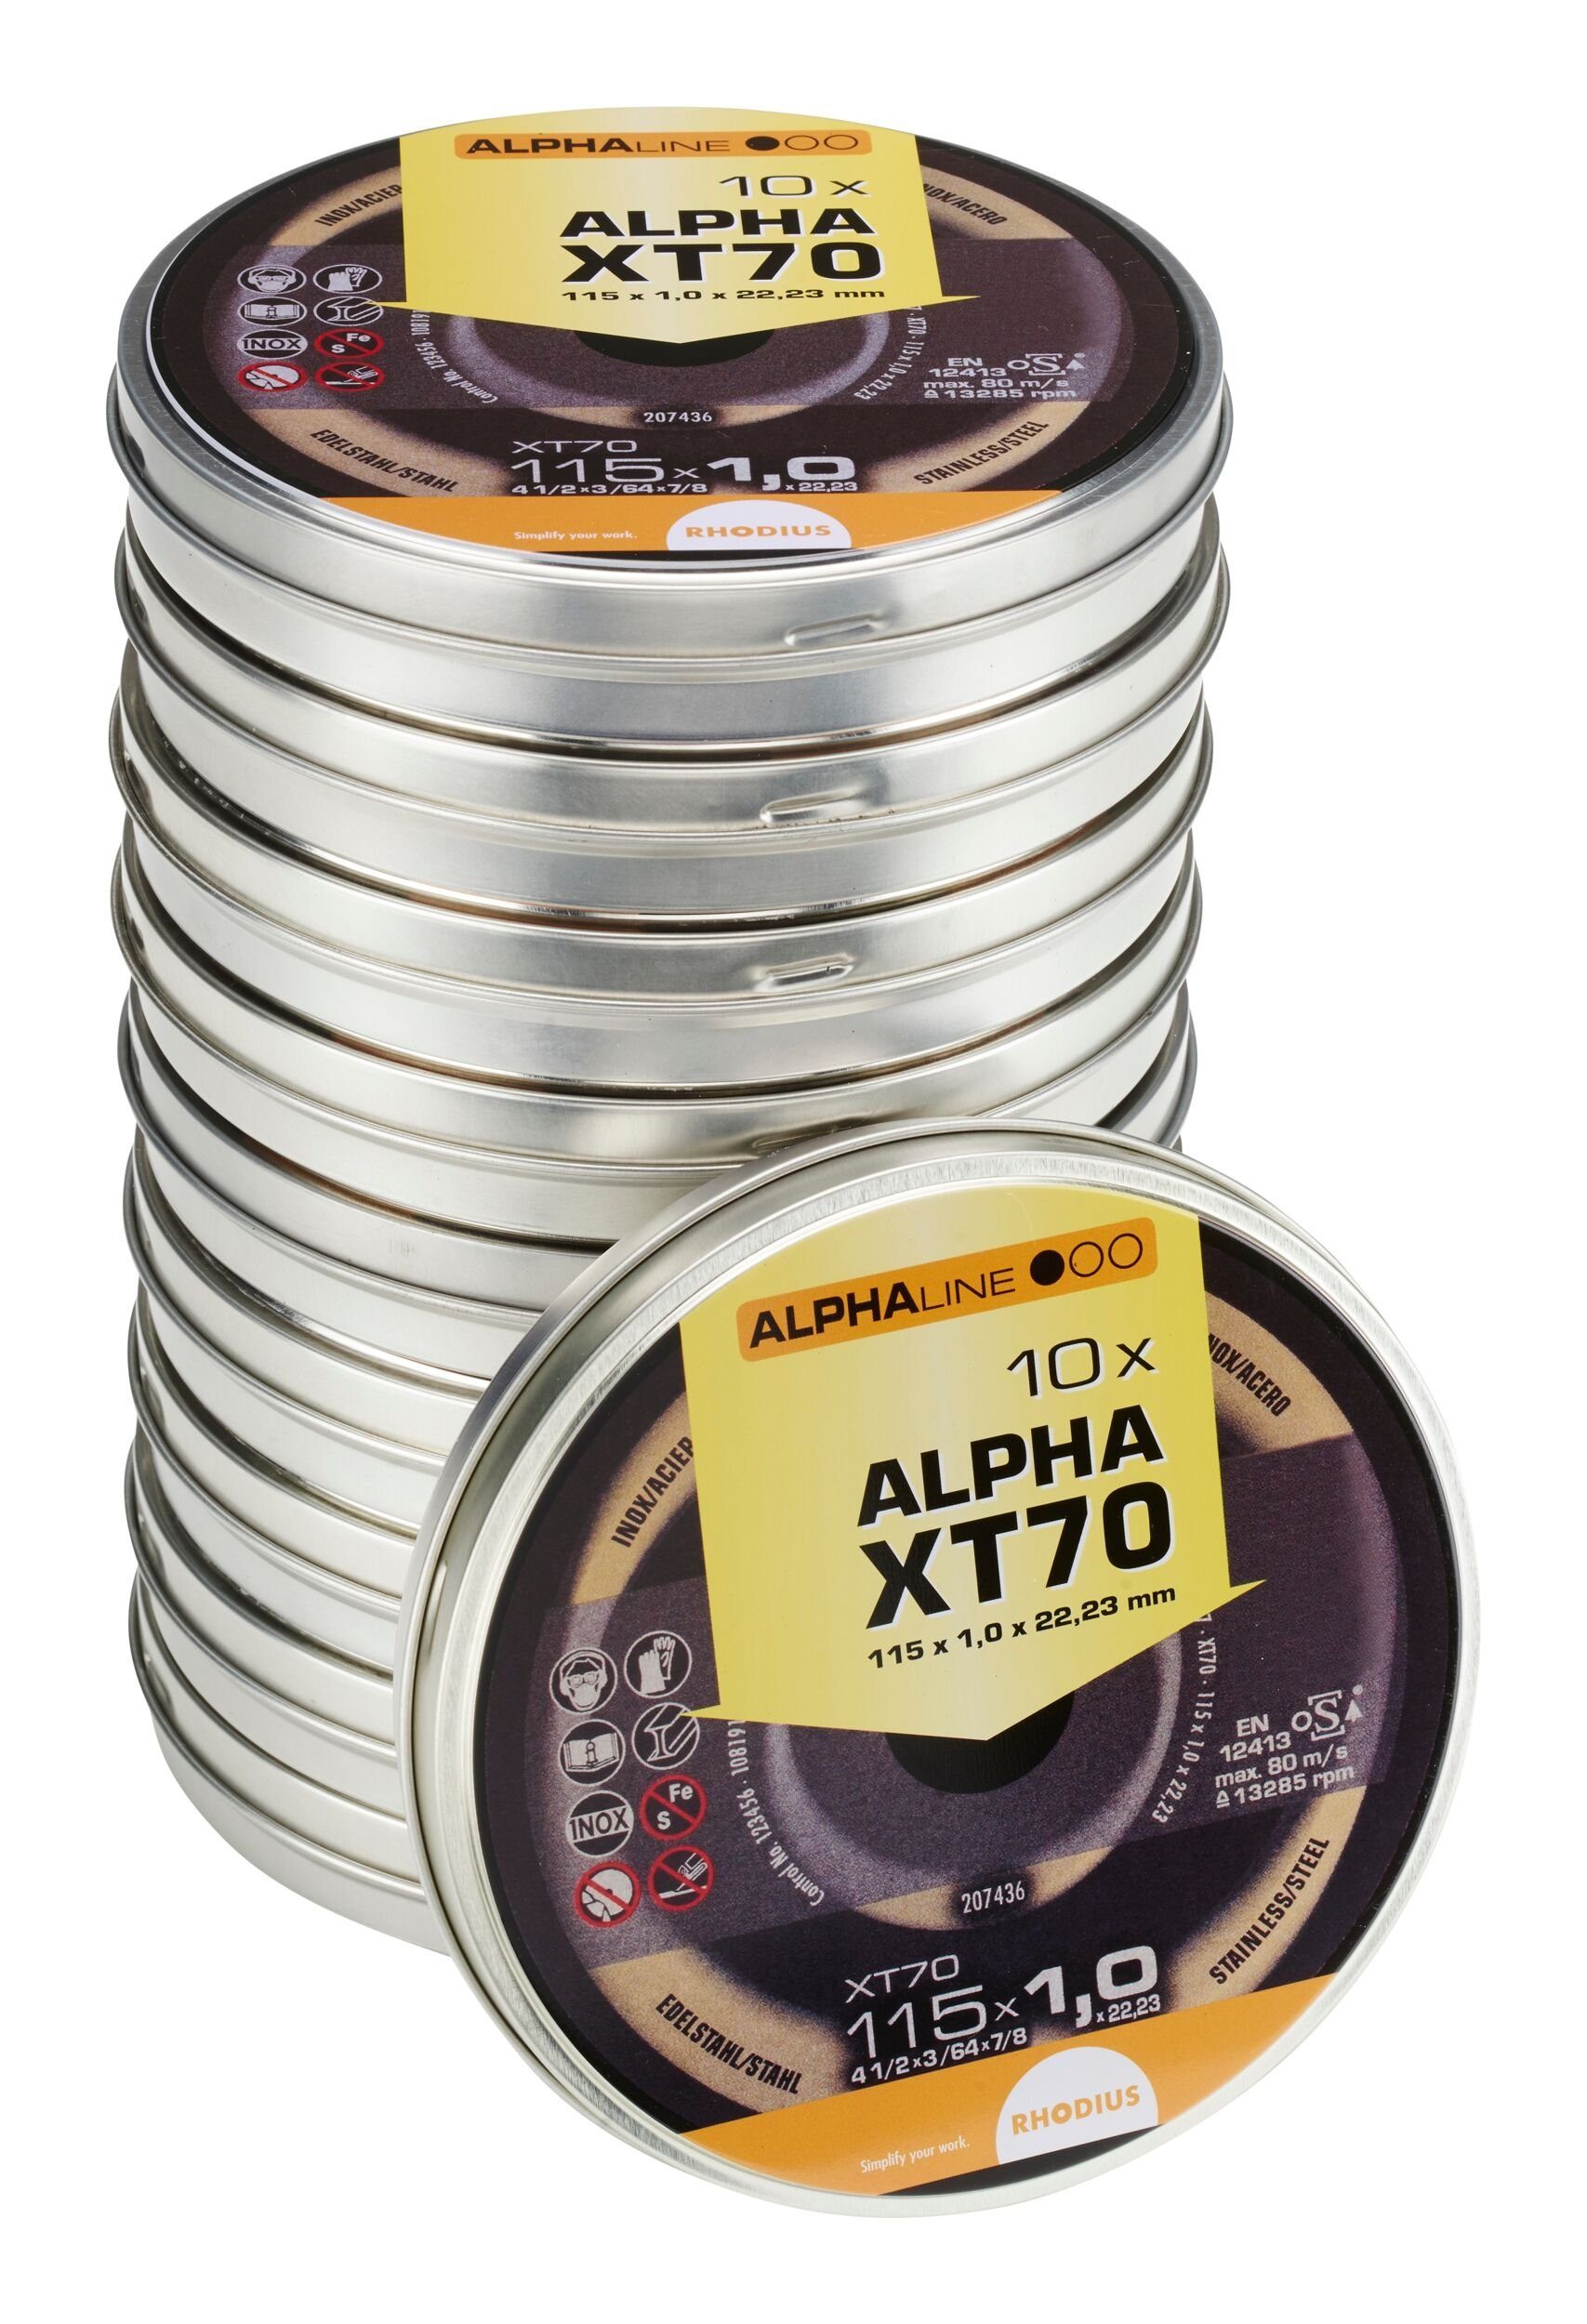 Rhodius Trennscheibe ALPHAline (10 mm, 115 ALPHAline - 1 Stück), 22,23 BOX Extradünne x - Dose XTS, x XT70 in der mm 115 Ø